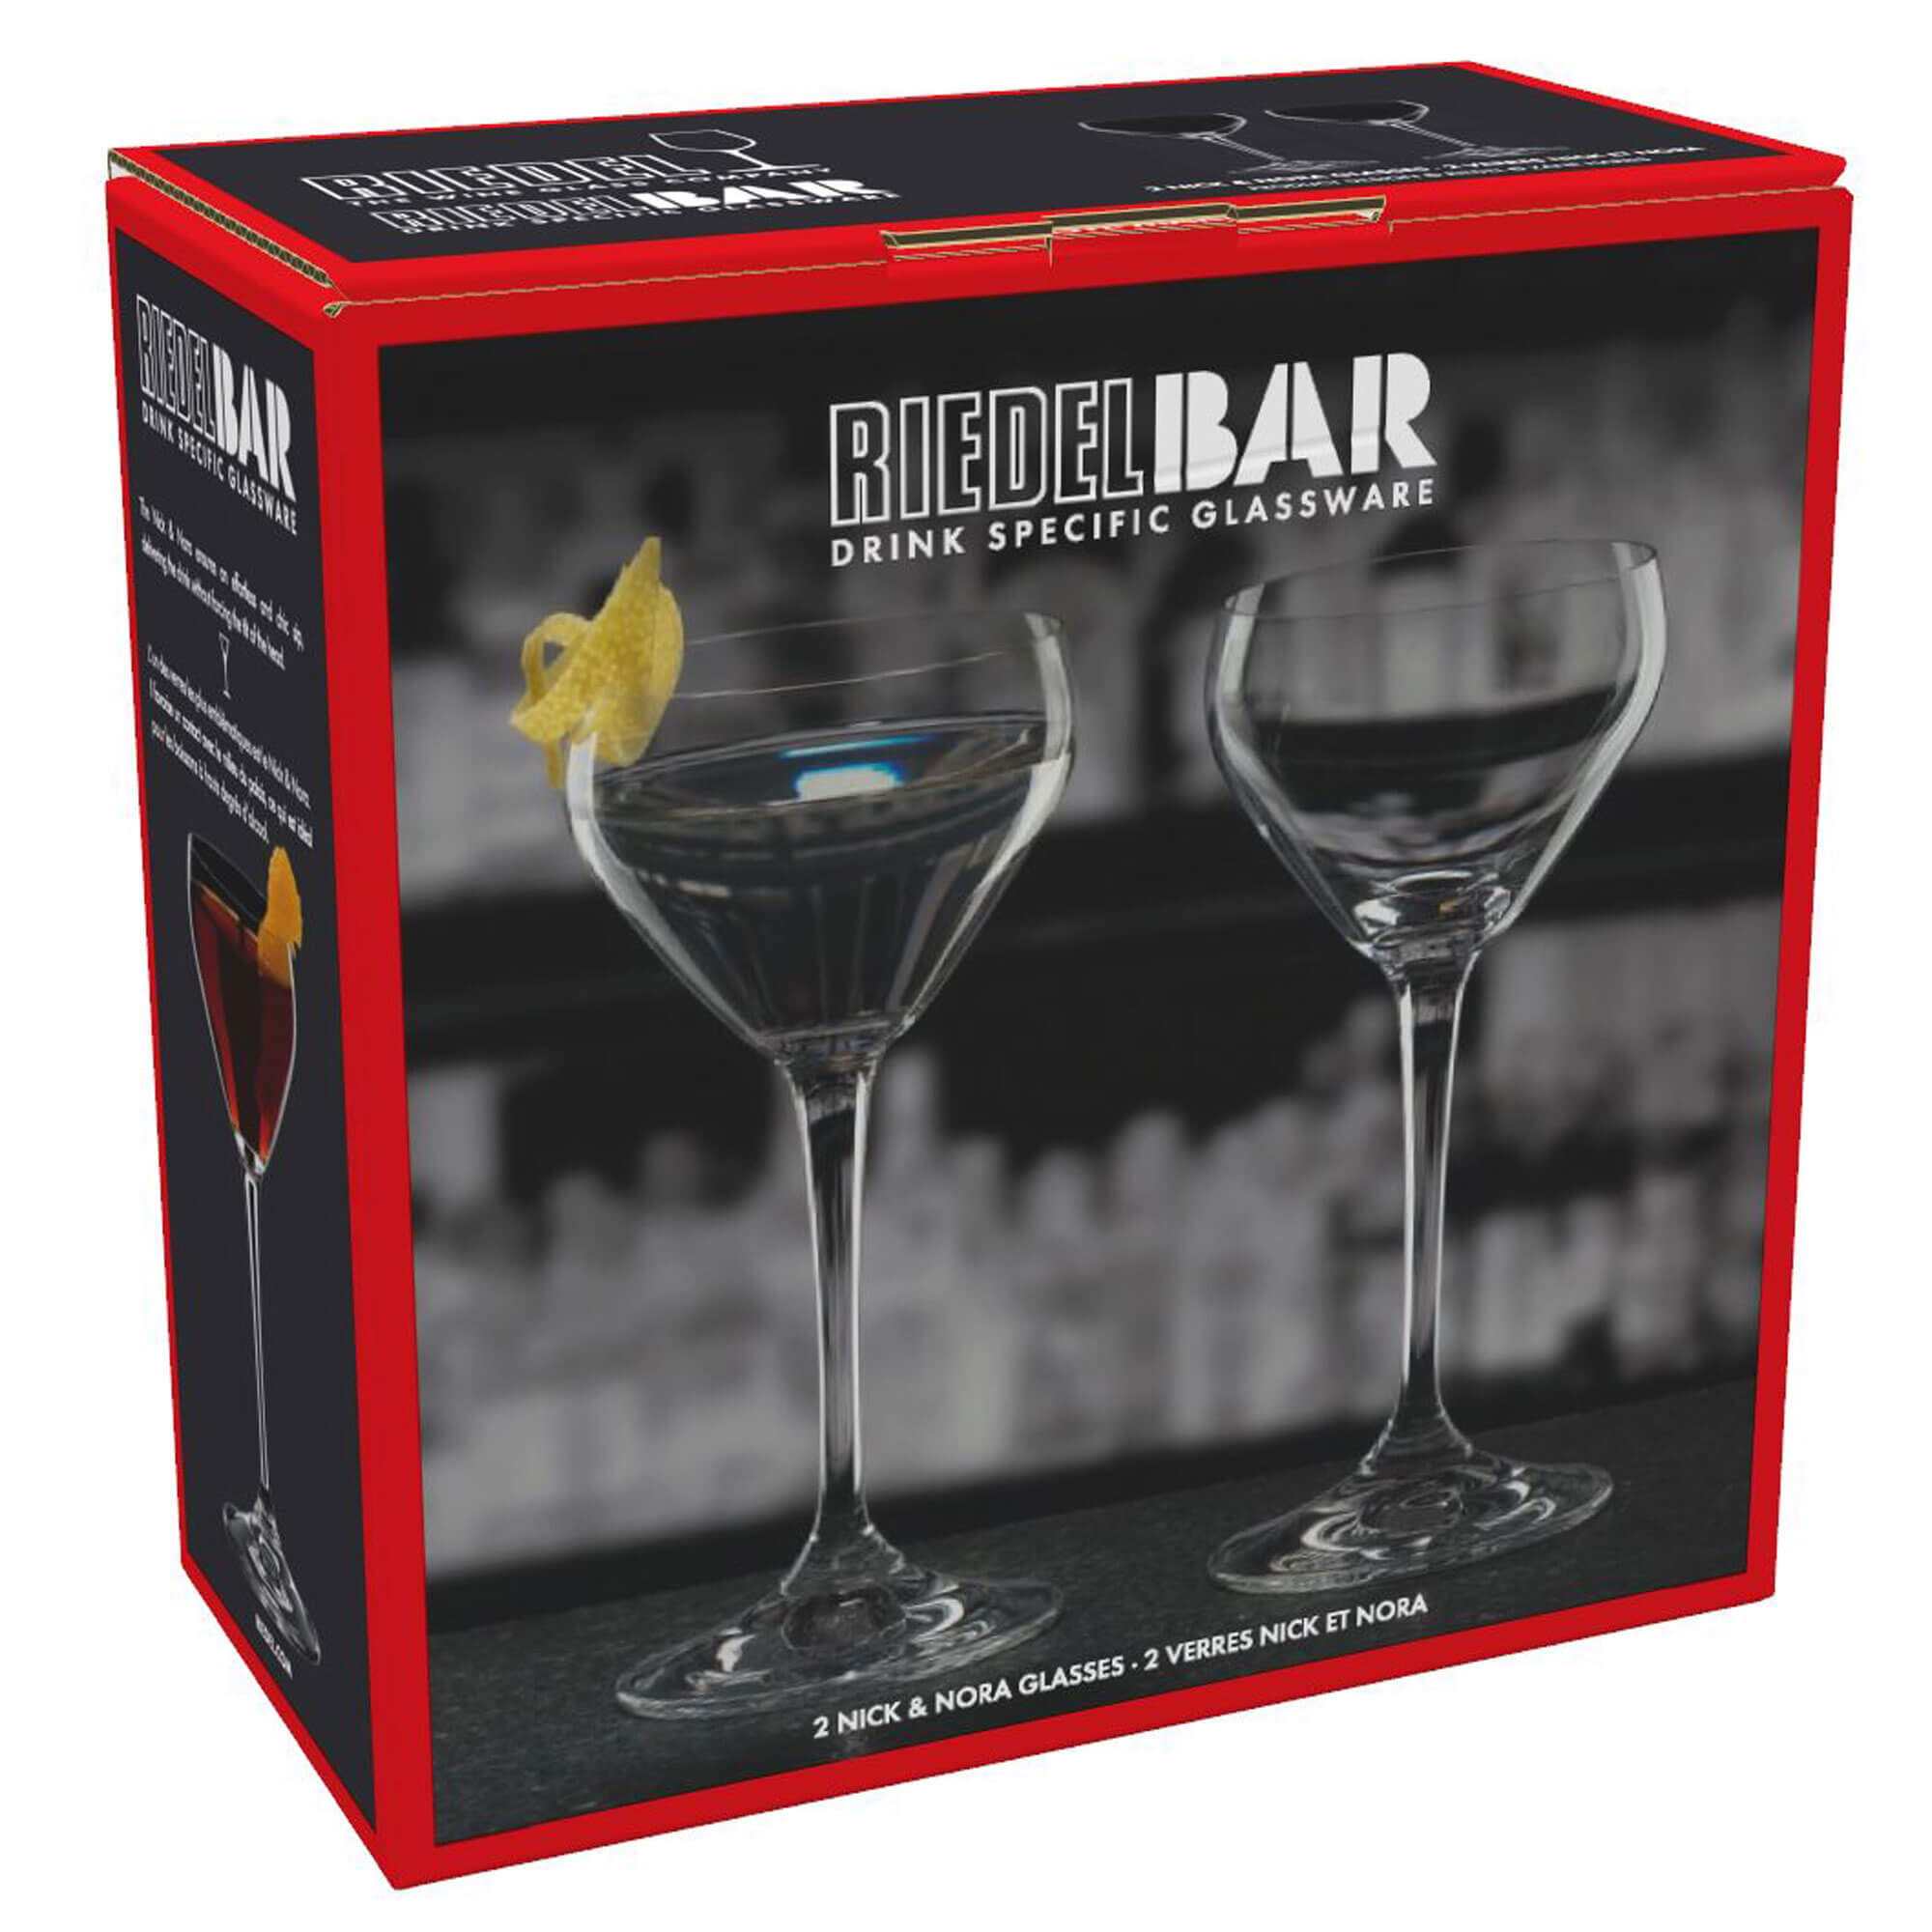 Nick & Nora glass Drink Specific Glassware, Riedel Bar - 140ml (2 pcs.)